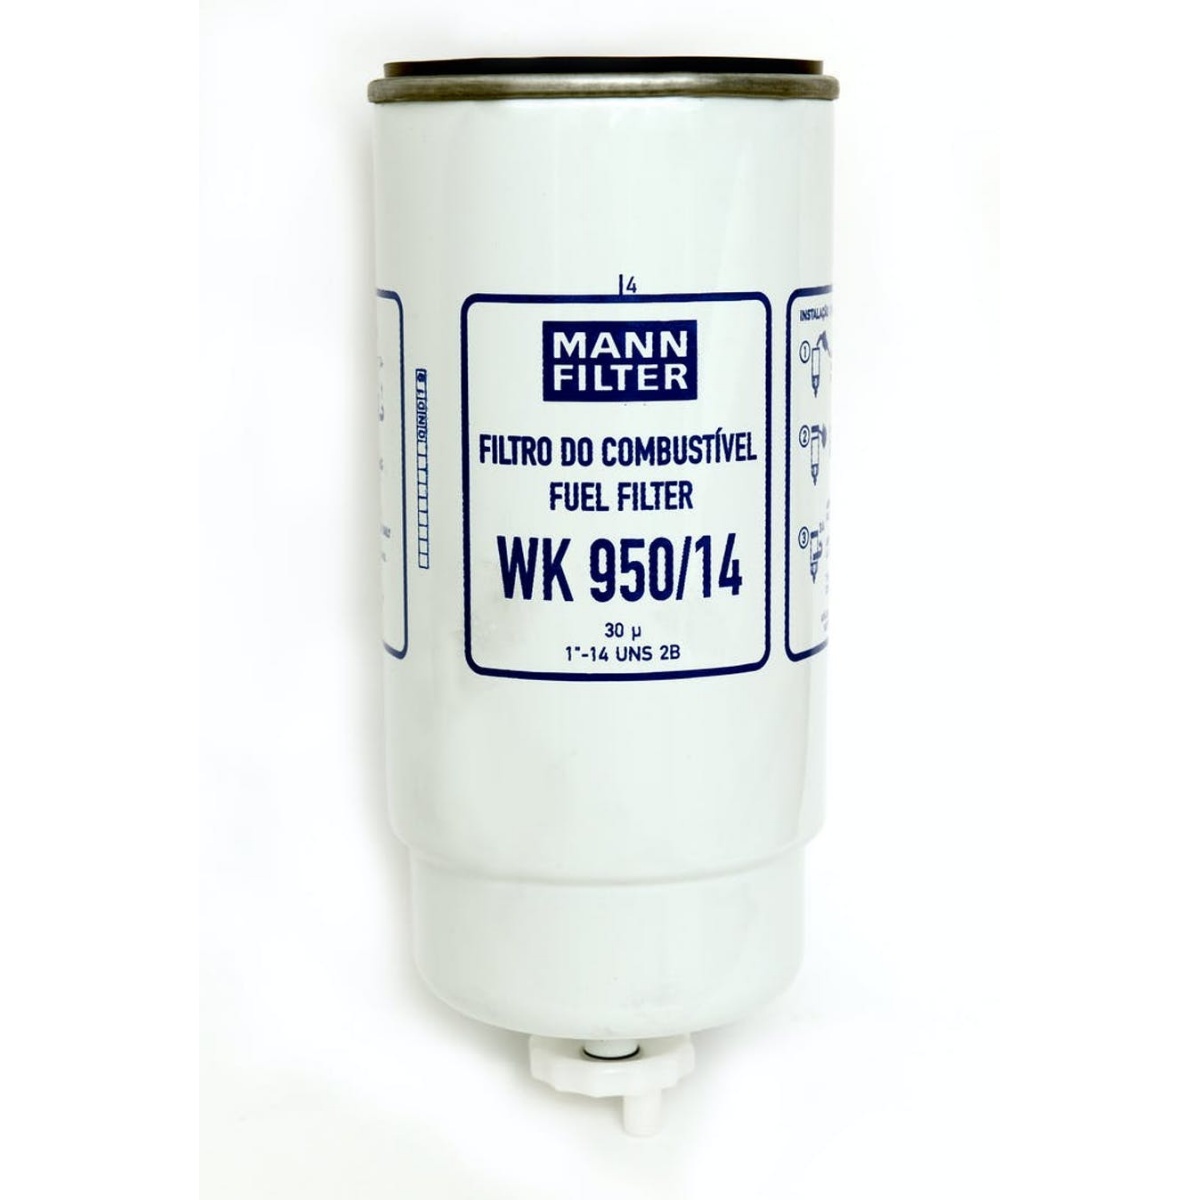 Filtro Combustivel Vw 13-180 A Partir De 2000 Motor Mwm 6,10 Tca Mann Filtros Wk950/14